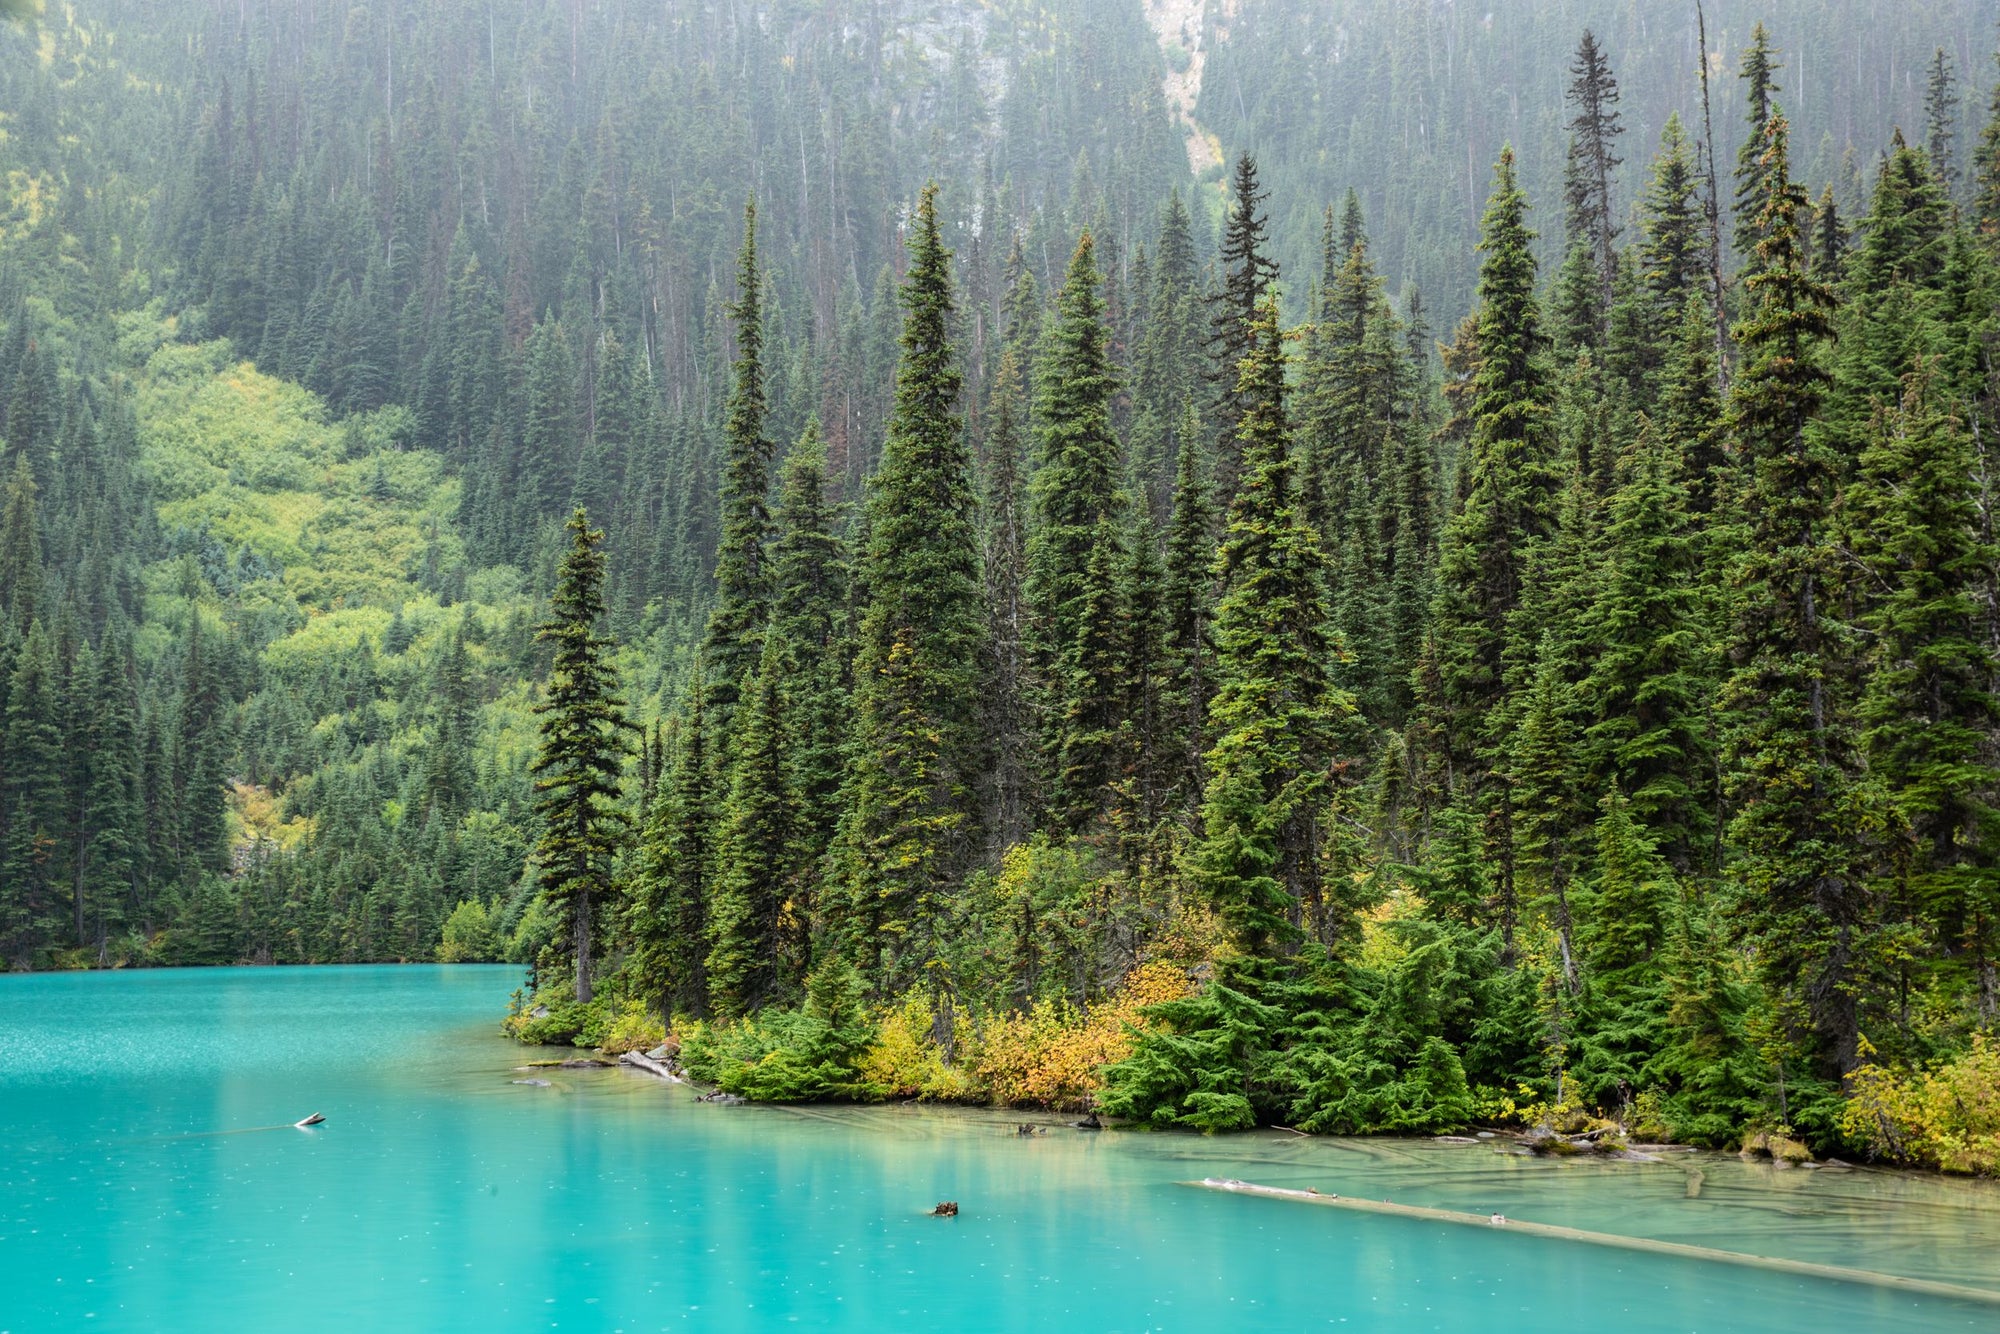 A turquoise lake hugs a pine tree laden shore.